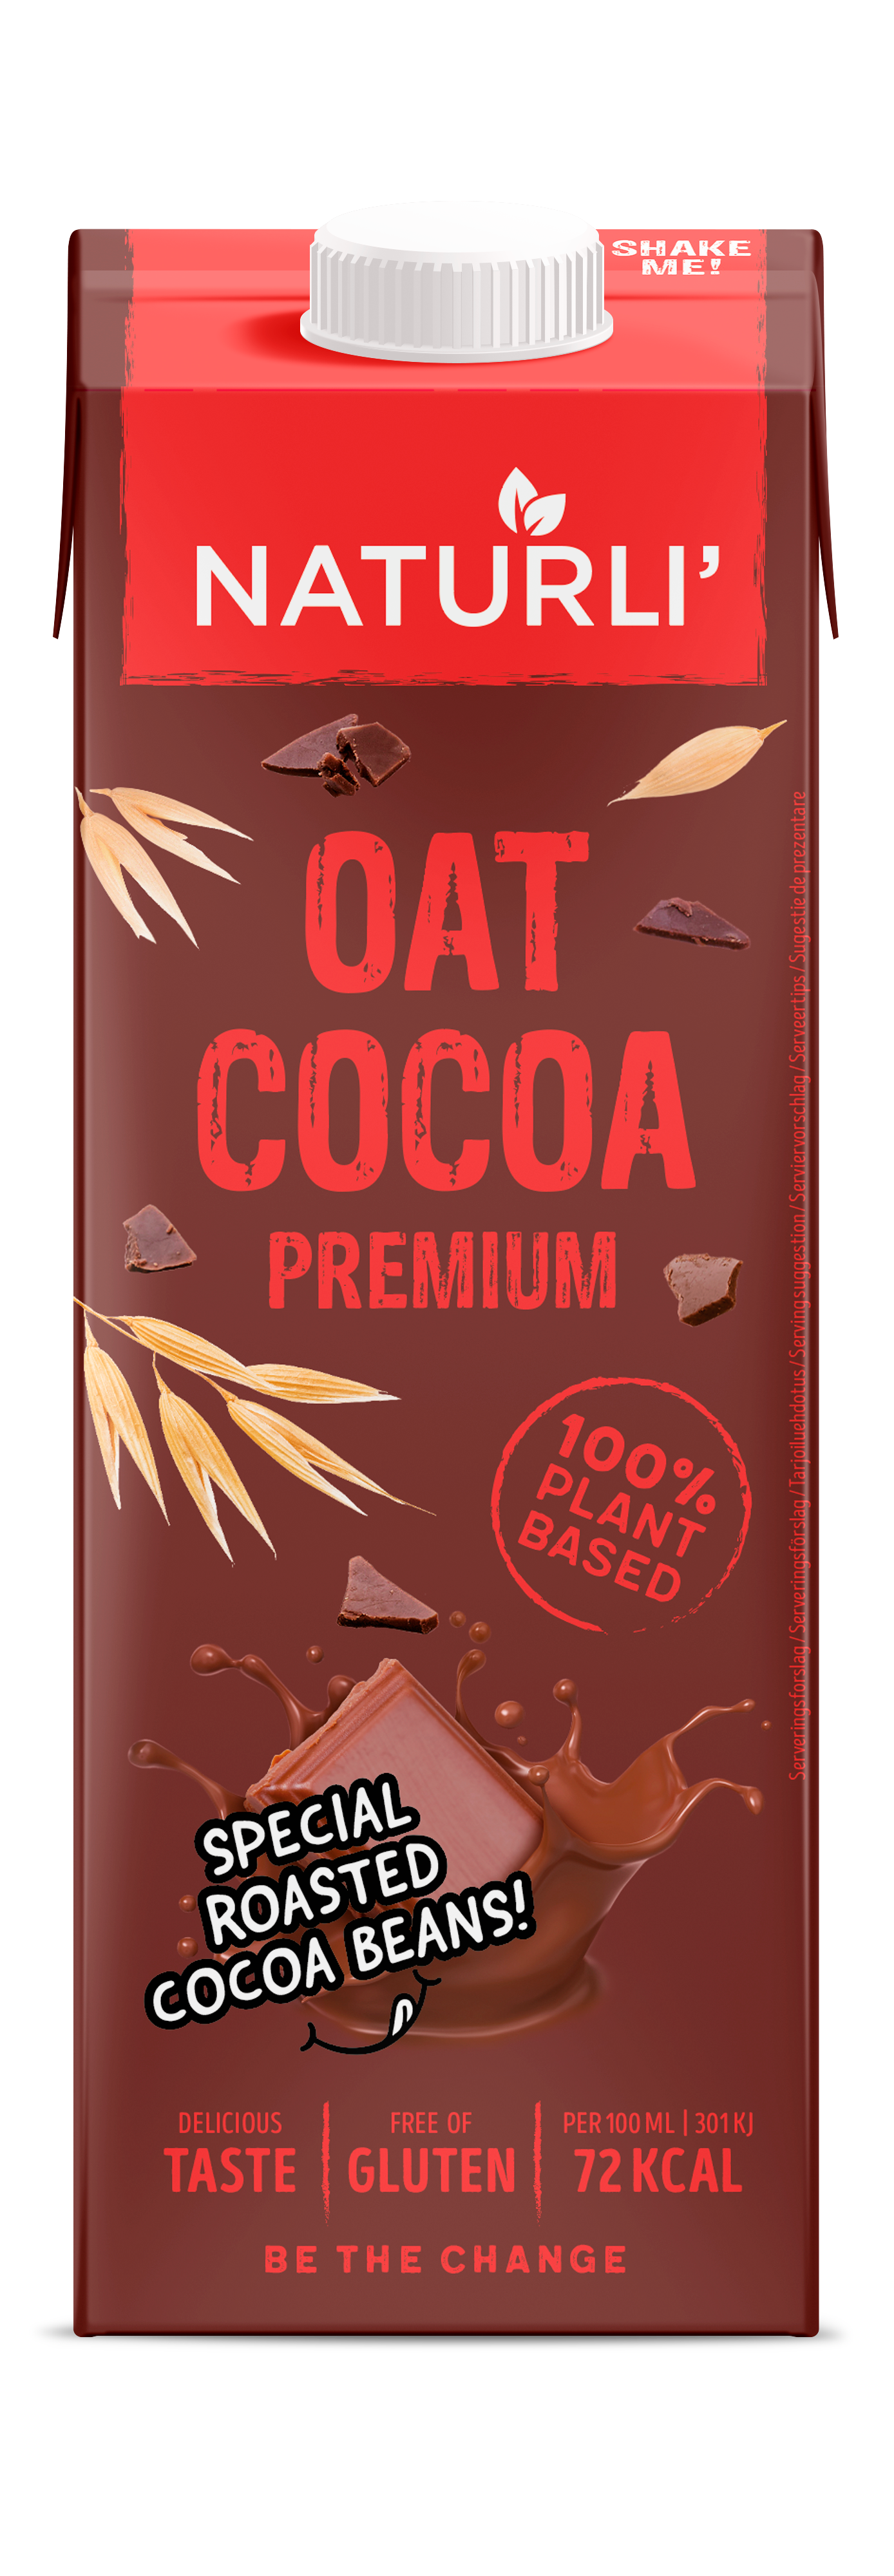 NATURLI’ Oat Cocoa Premium